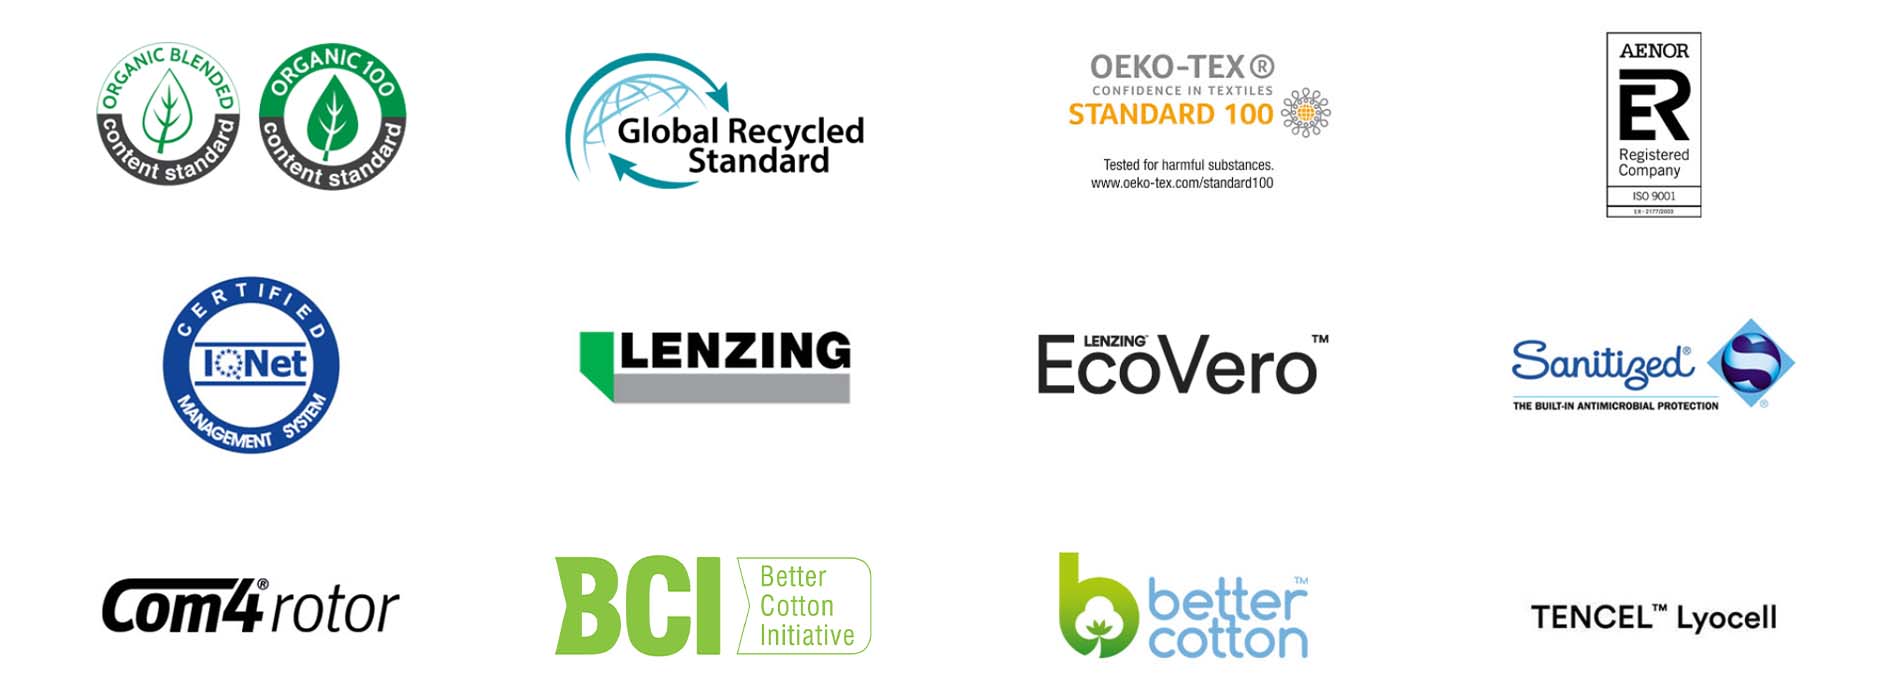 organic 100, global recycled standard, oeko-tex, aenor, lenzin, lenzing ecovero, com4rotor, BCI, better cotton, tencel lyocell, iqnet, sanitized